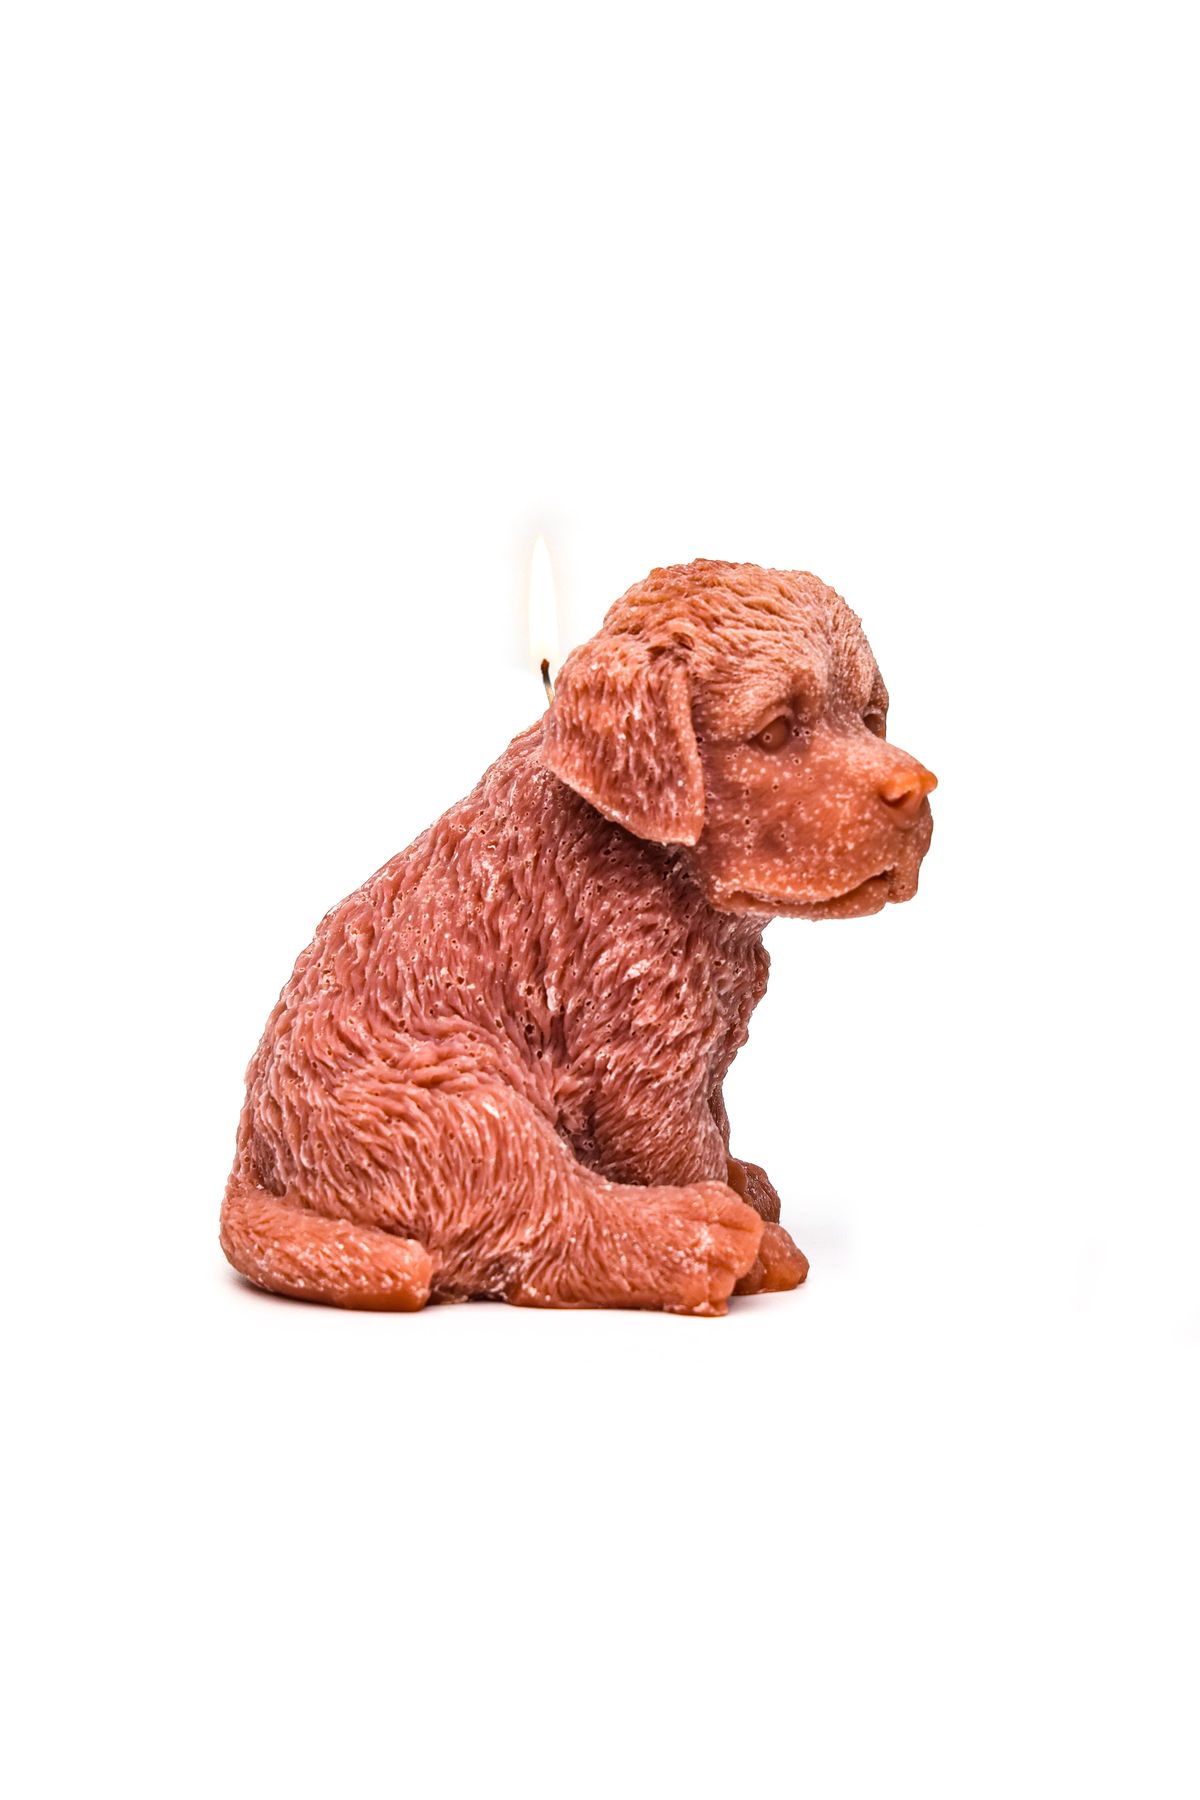 Missi Büyük Dekoratif Kahverengi Köpek Mum